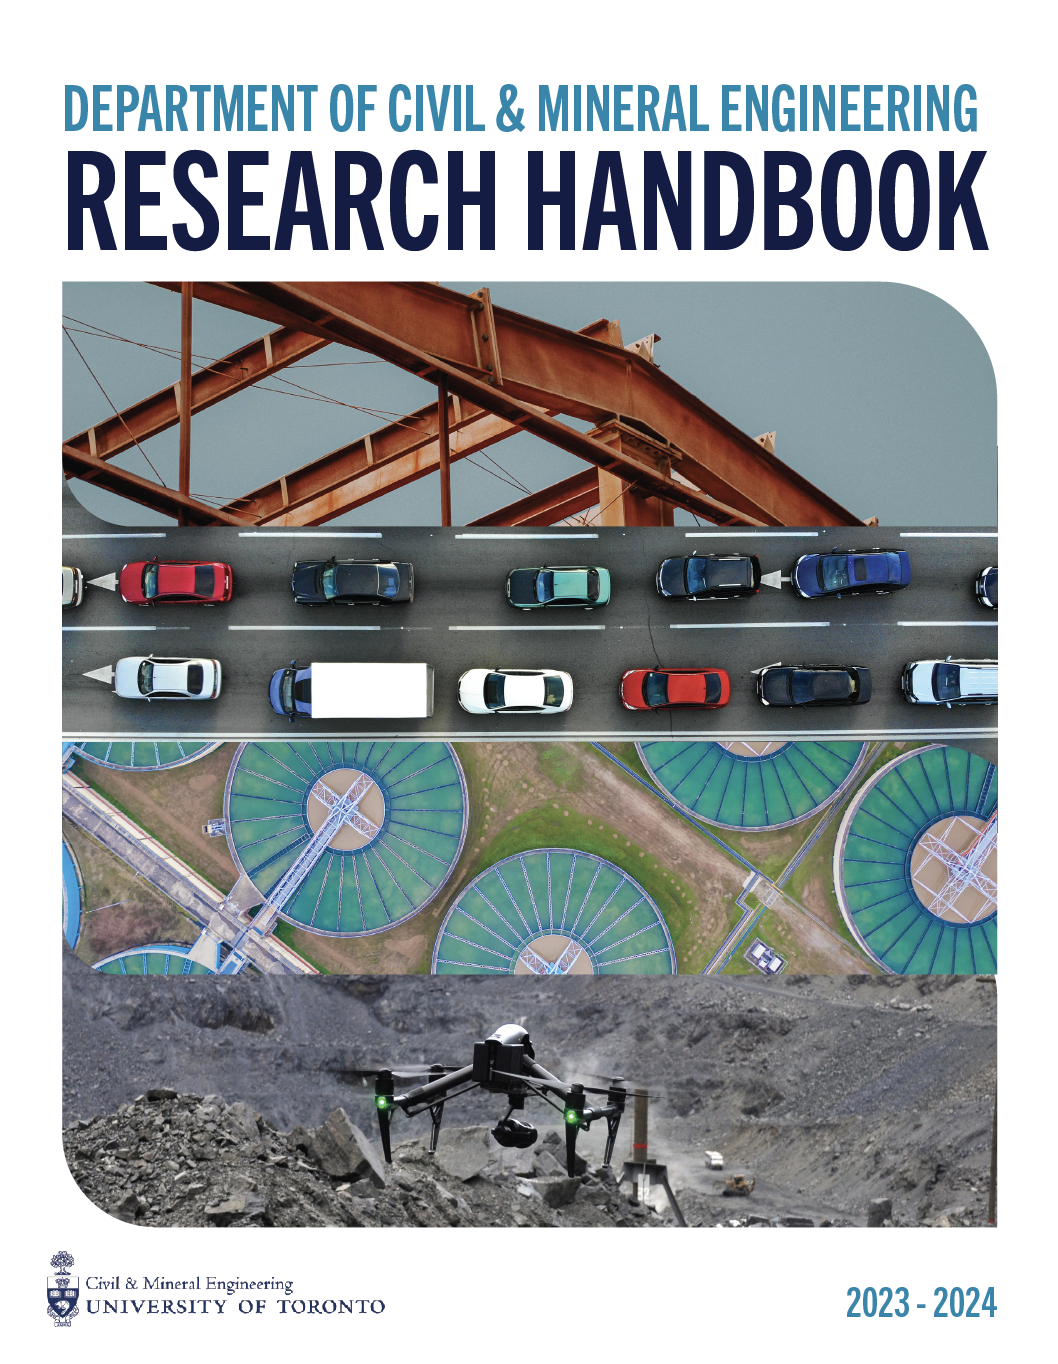 Research Handbook 2023-2024